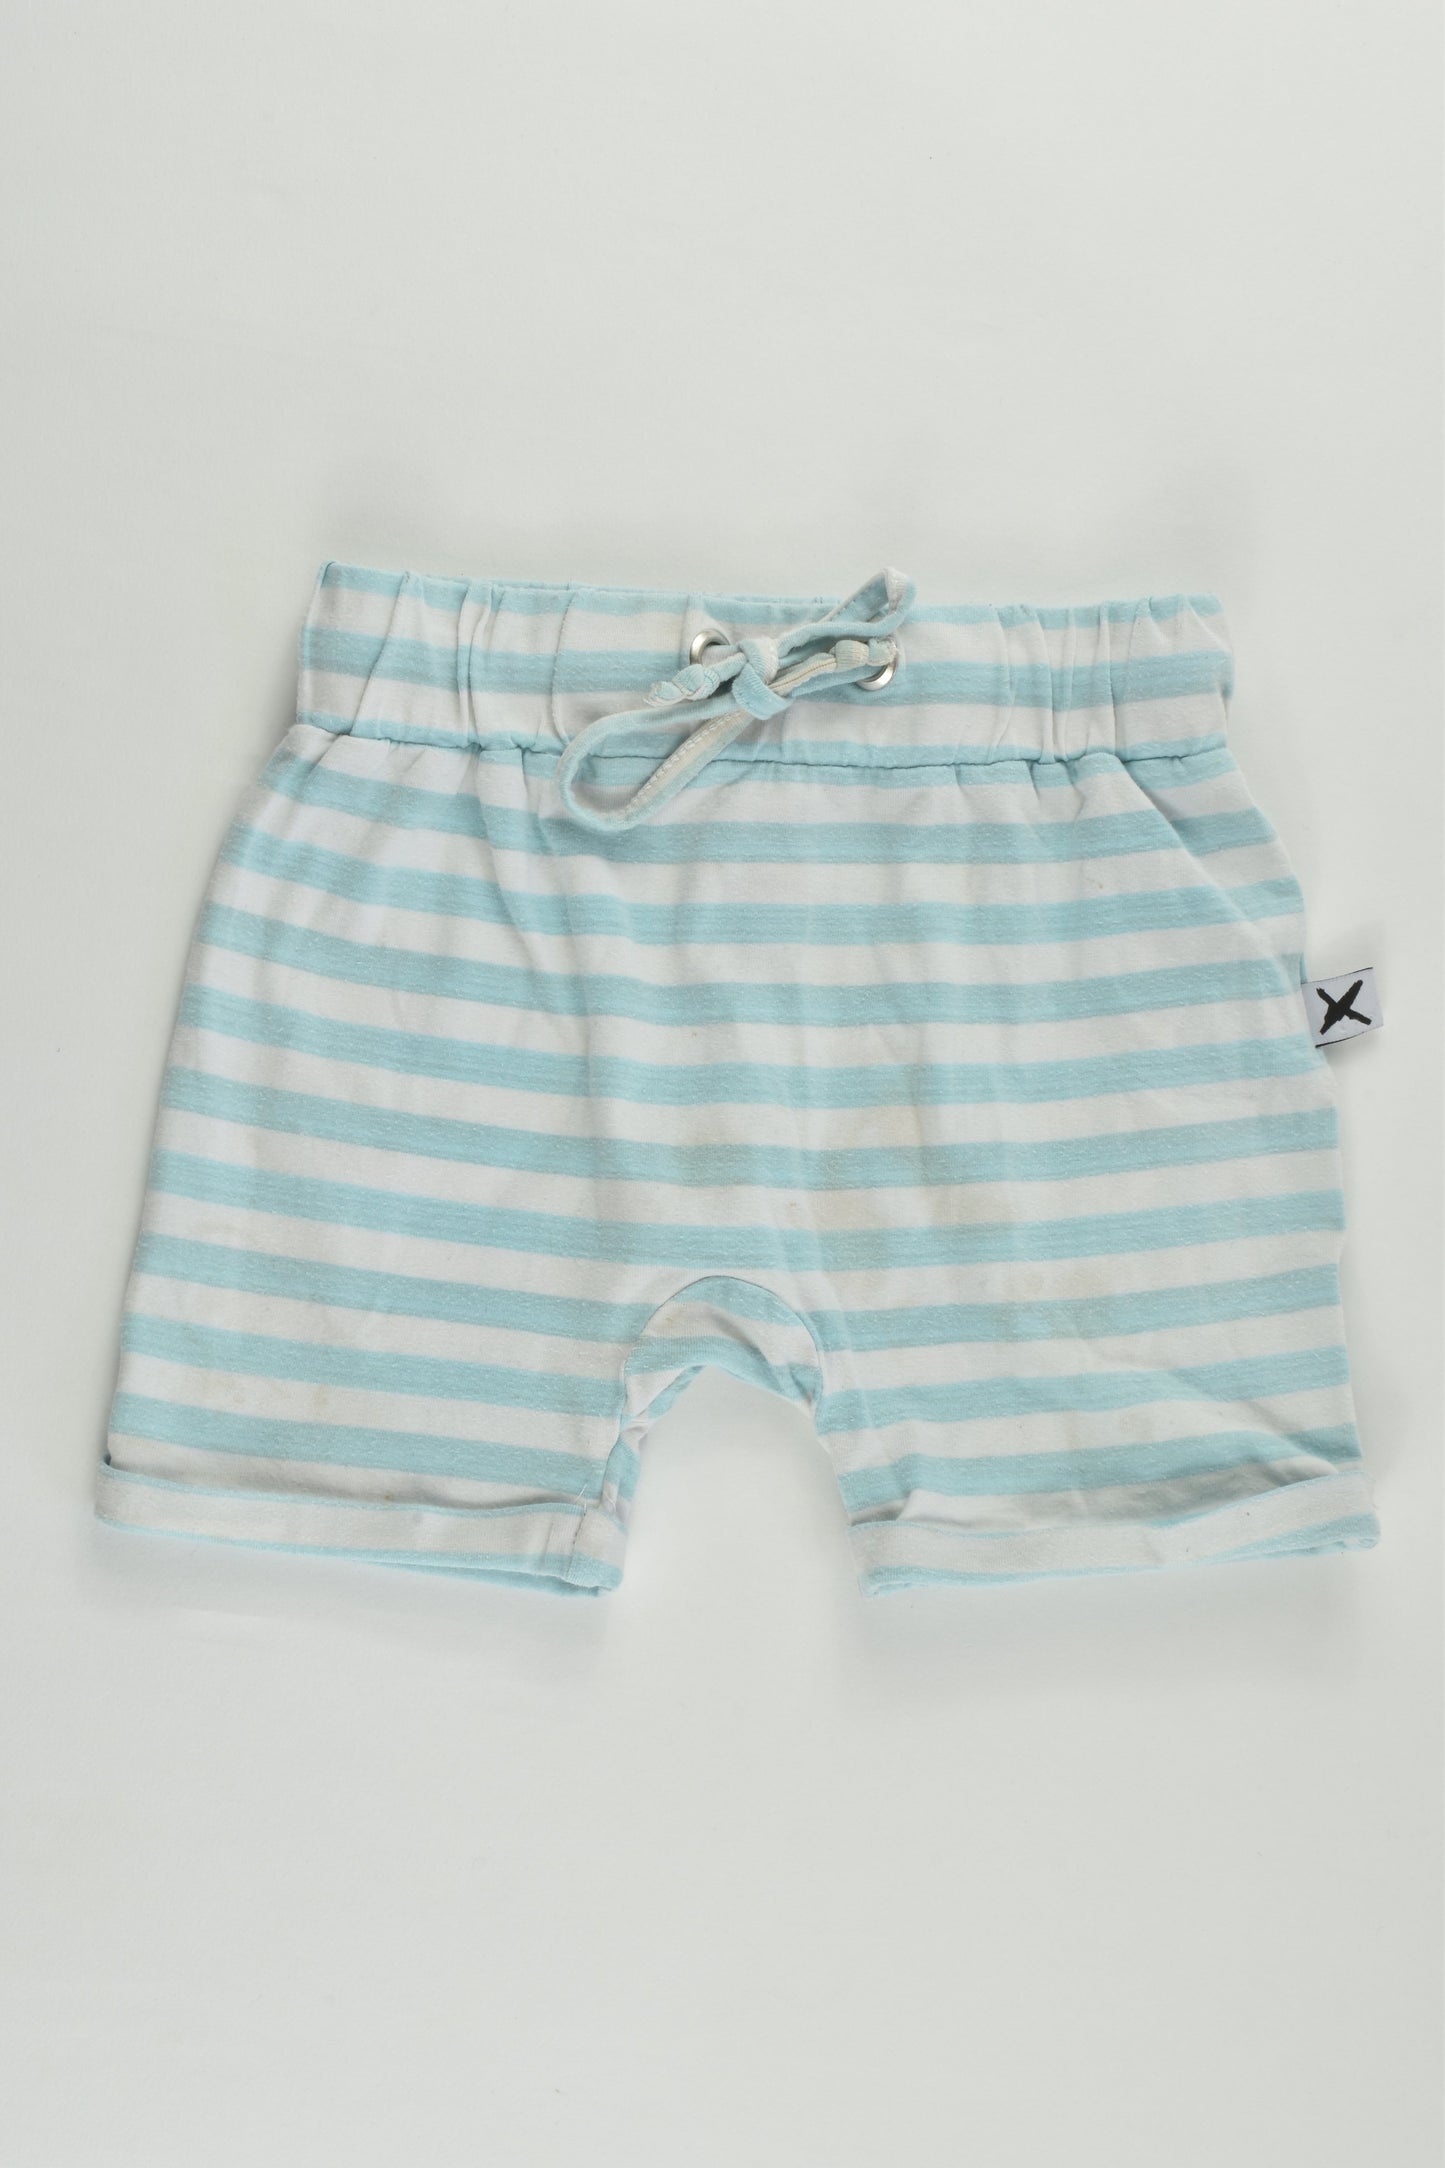 Minti Size 0 (6-12 months) Striped Shorts